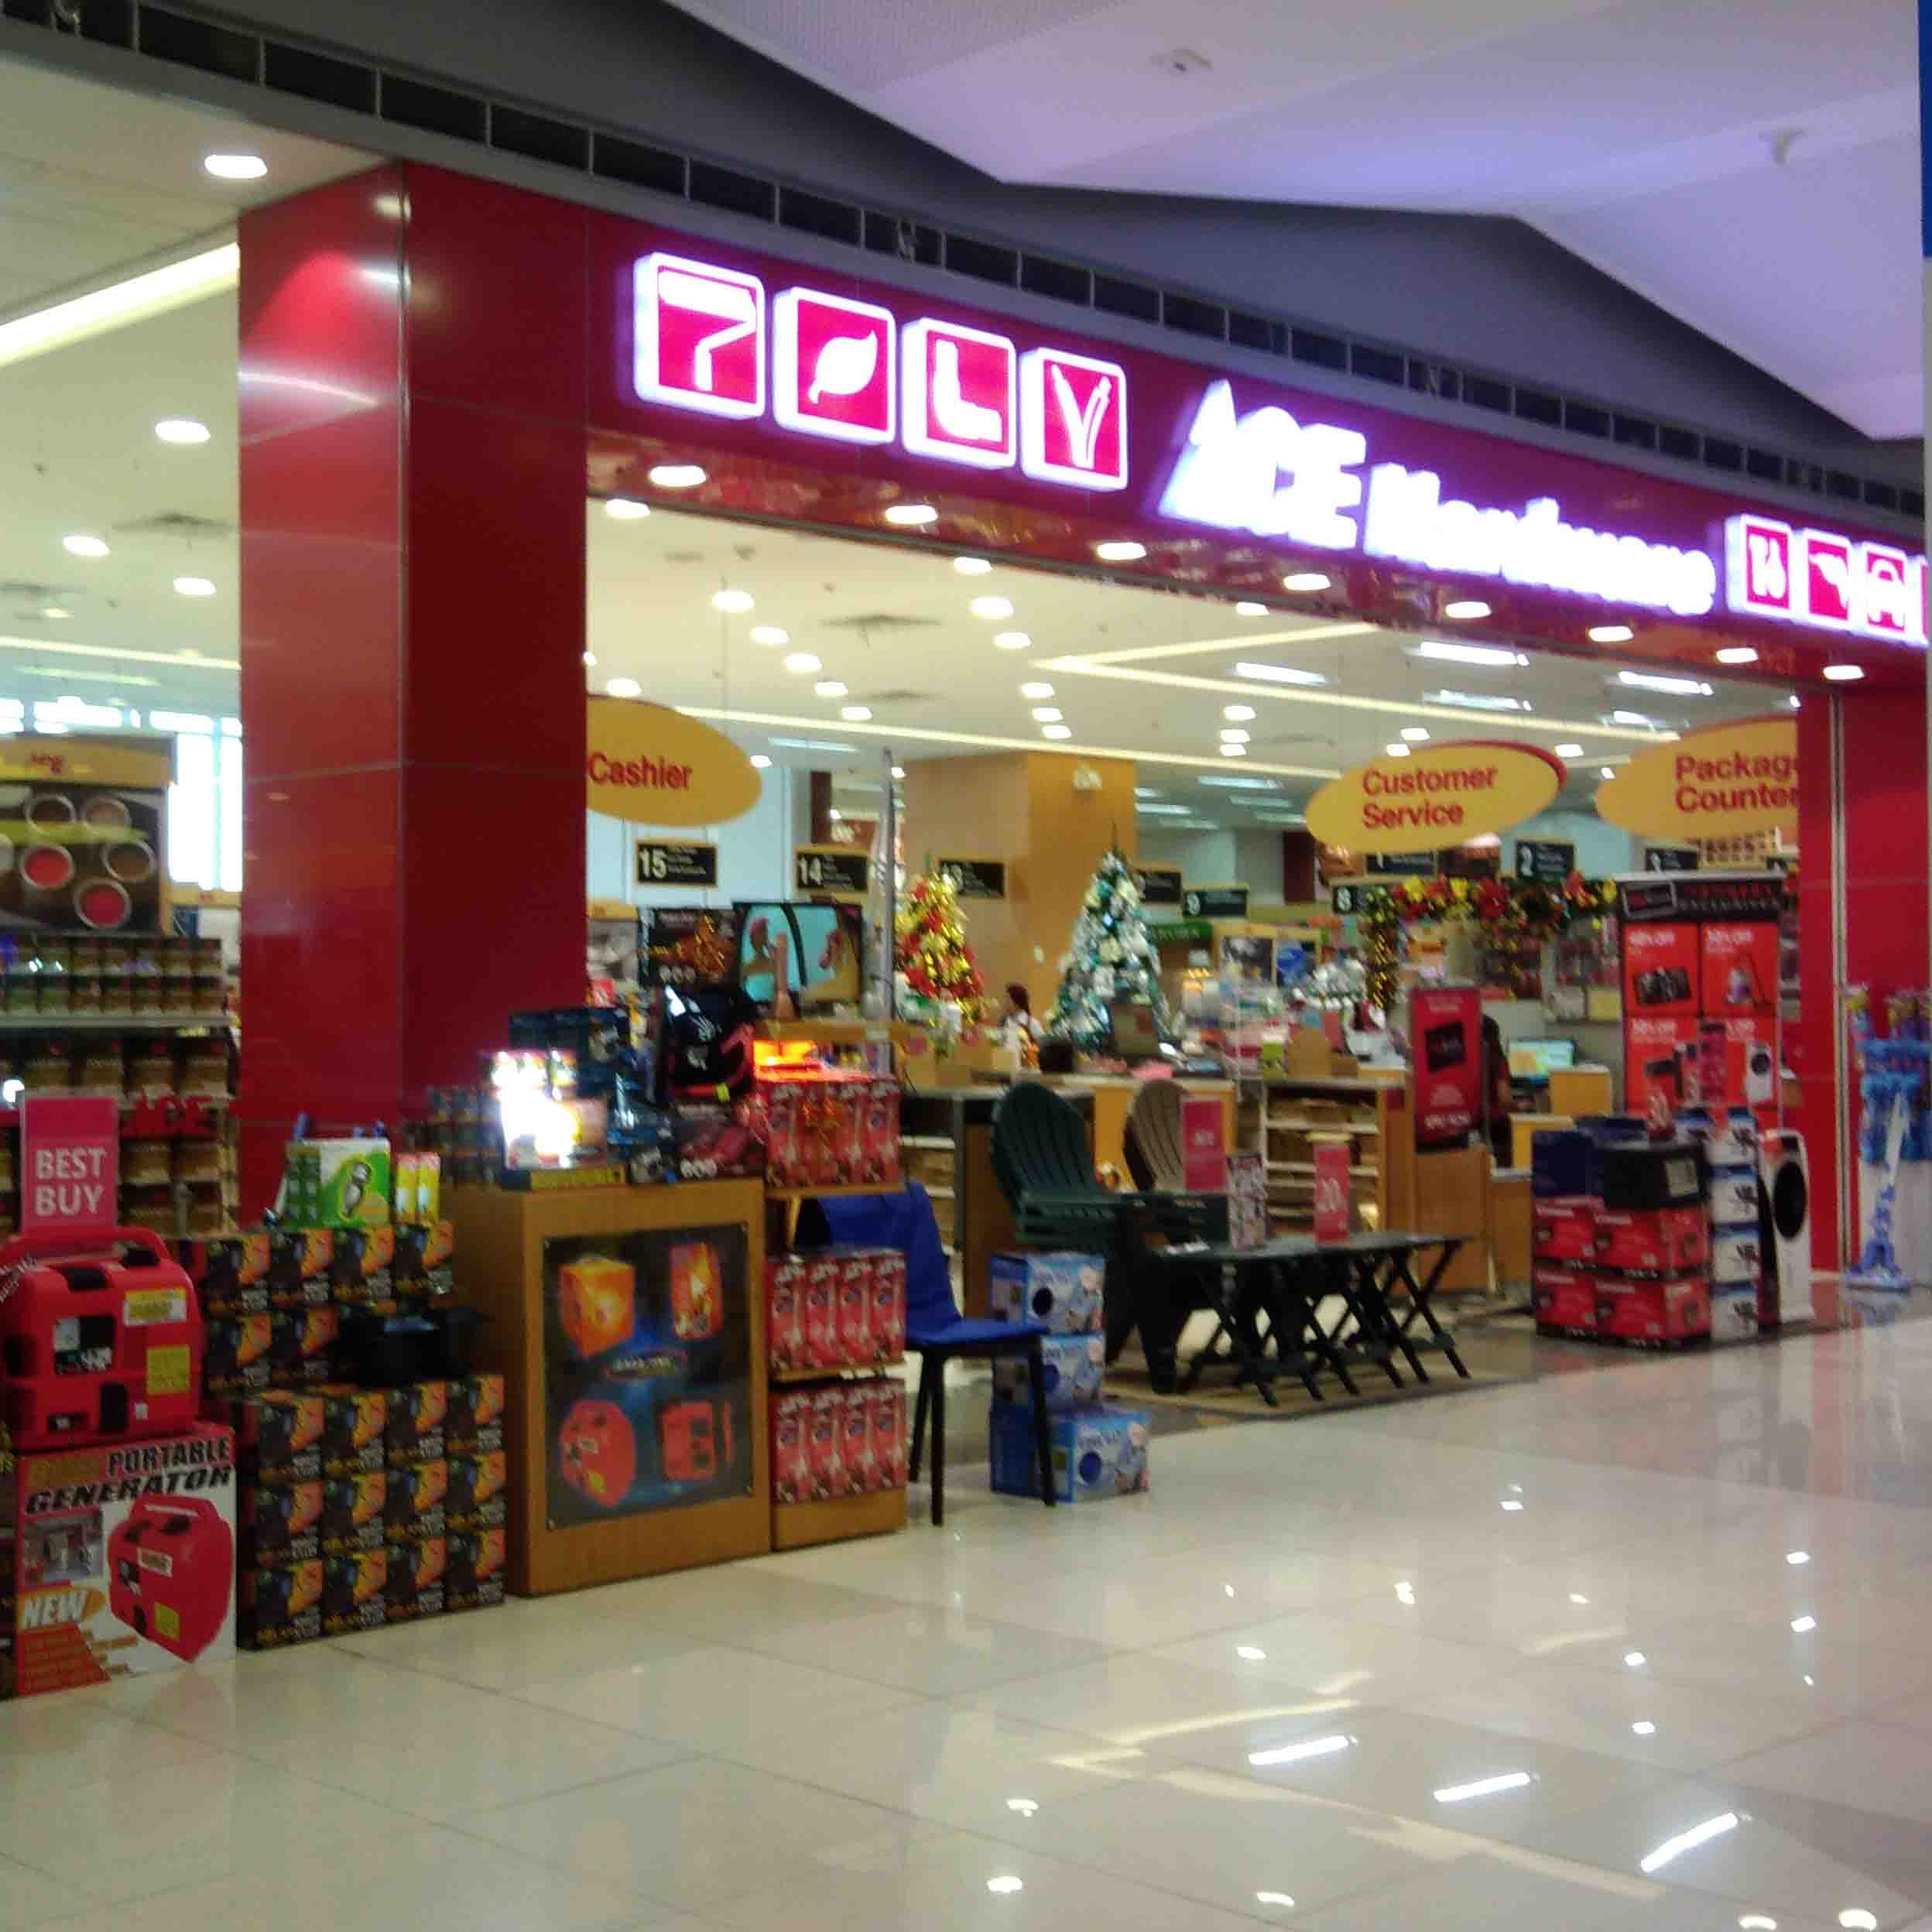 Ace Hardware Accessory Shop in Metro Manila beepbeep.ph